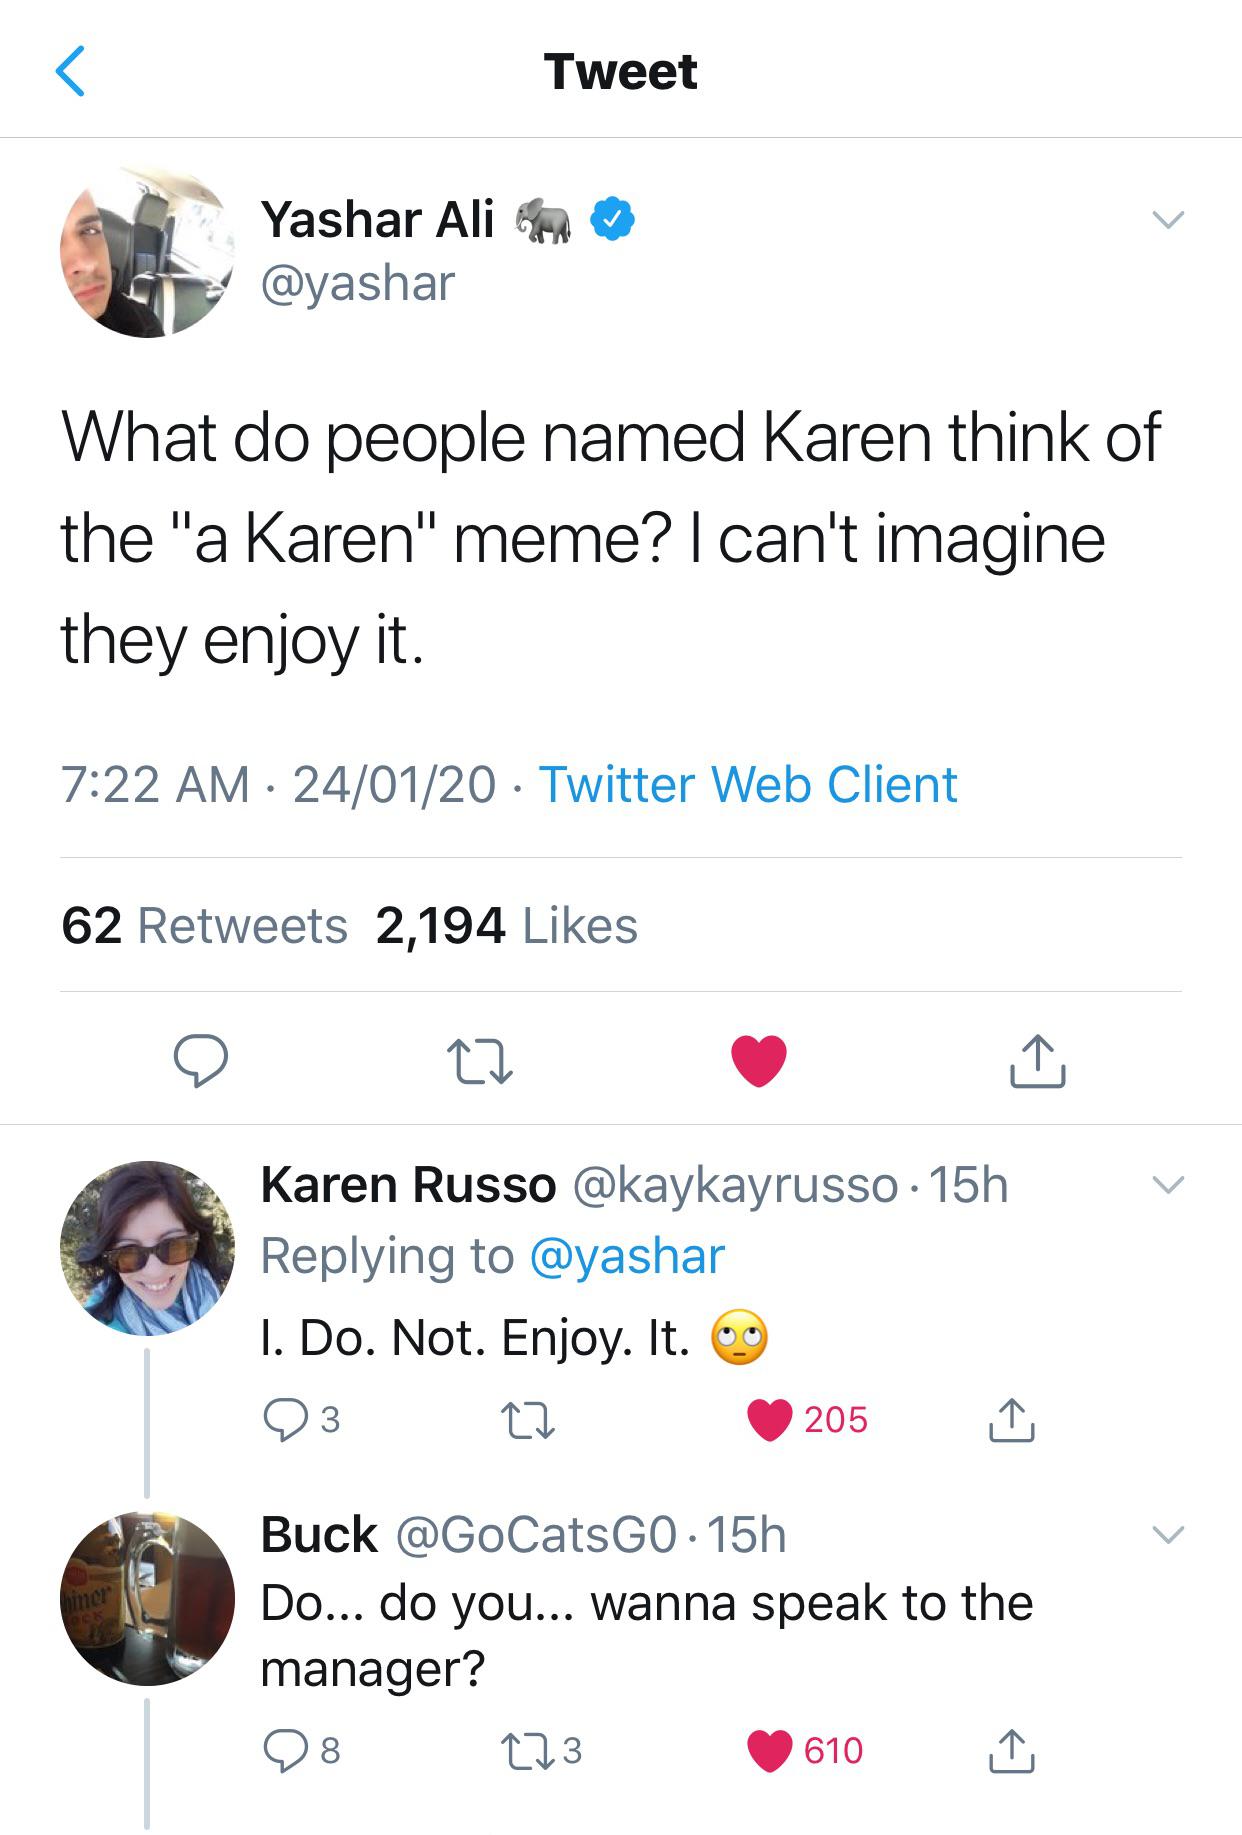 kim taehyung death threats - Tweet Yashar Ali What do people named Karen think of the "a Karen" meme? I can't imagine they enjoy it. 240120 Twitter Web Client 62 2,194 Karen Russo 15h 1. Do. Not. Enjoy. It. Q3 22 205 Buck Go 15h Do... do you... wanna spea